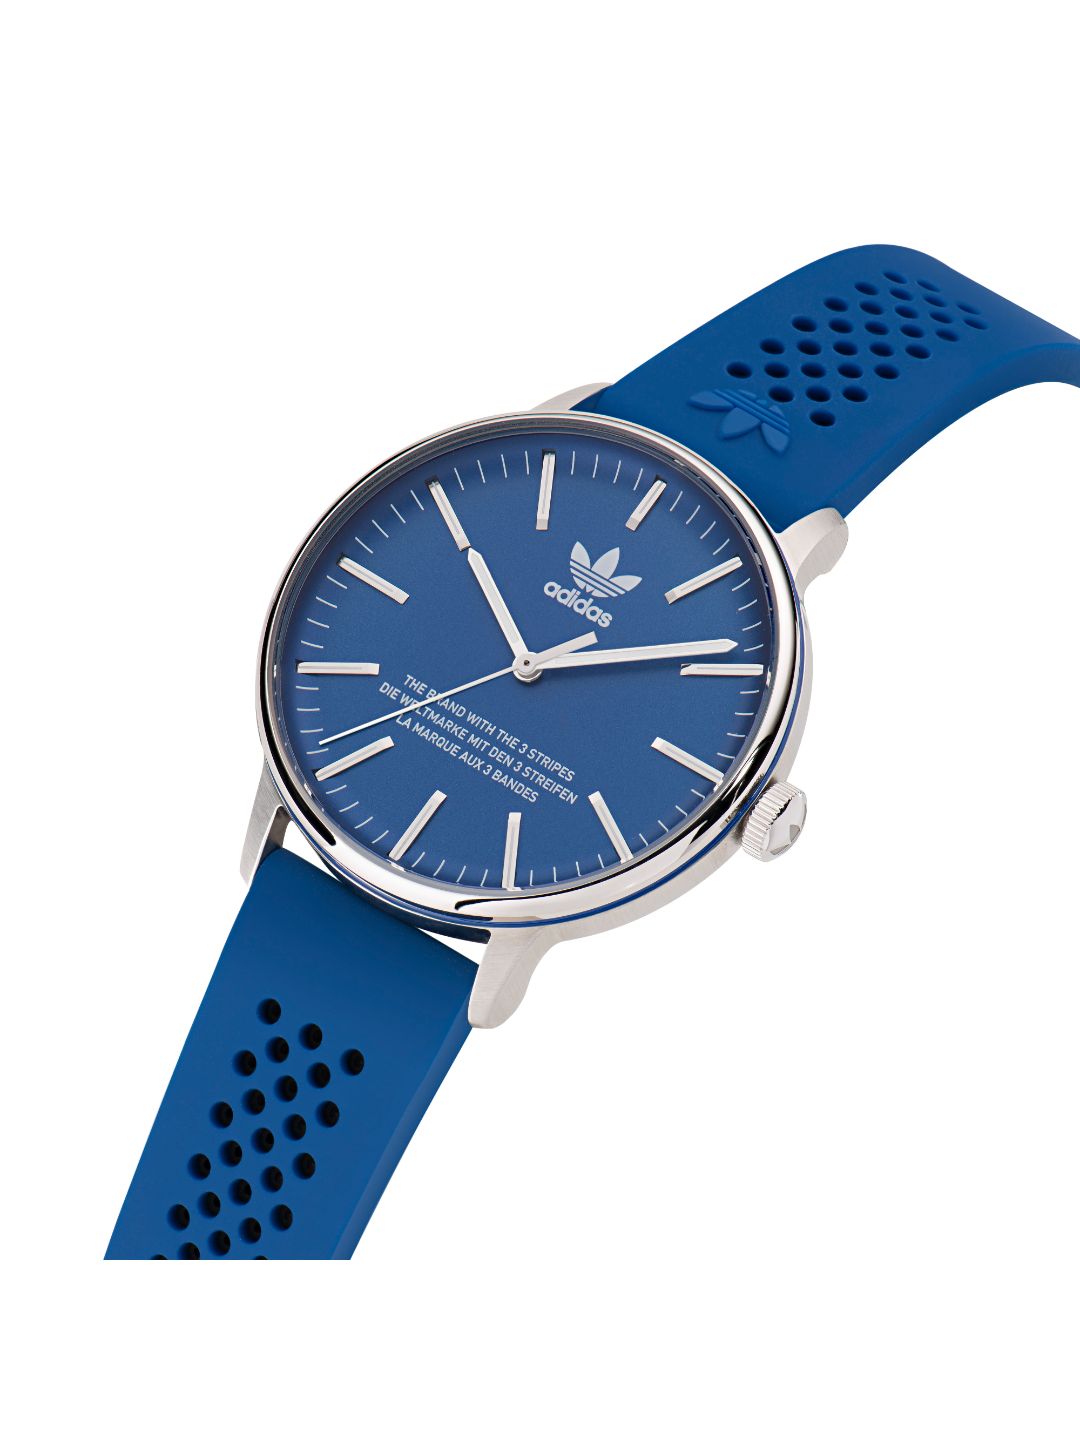 Adidas Originals Blue Dial Unisex Watch - AOSY23022